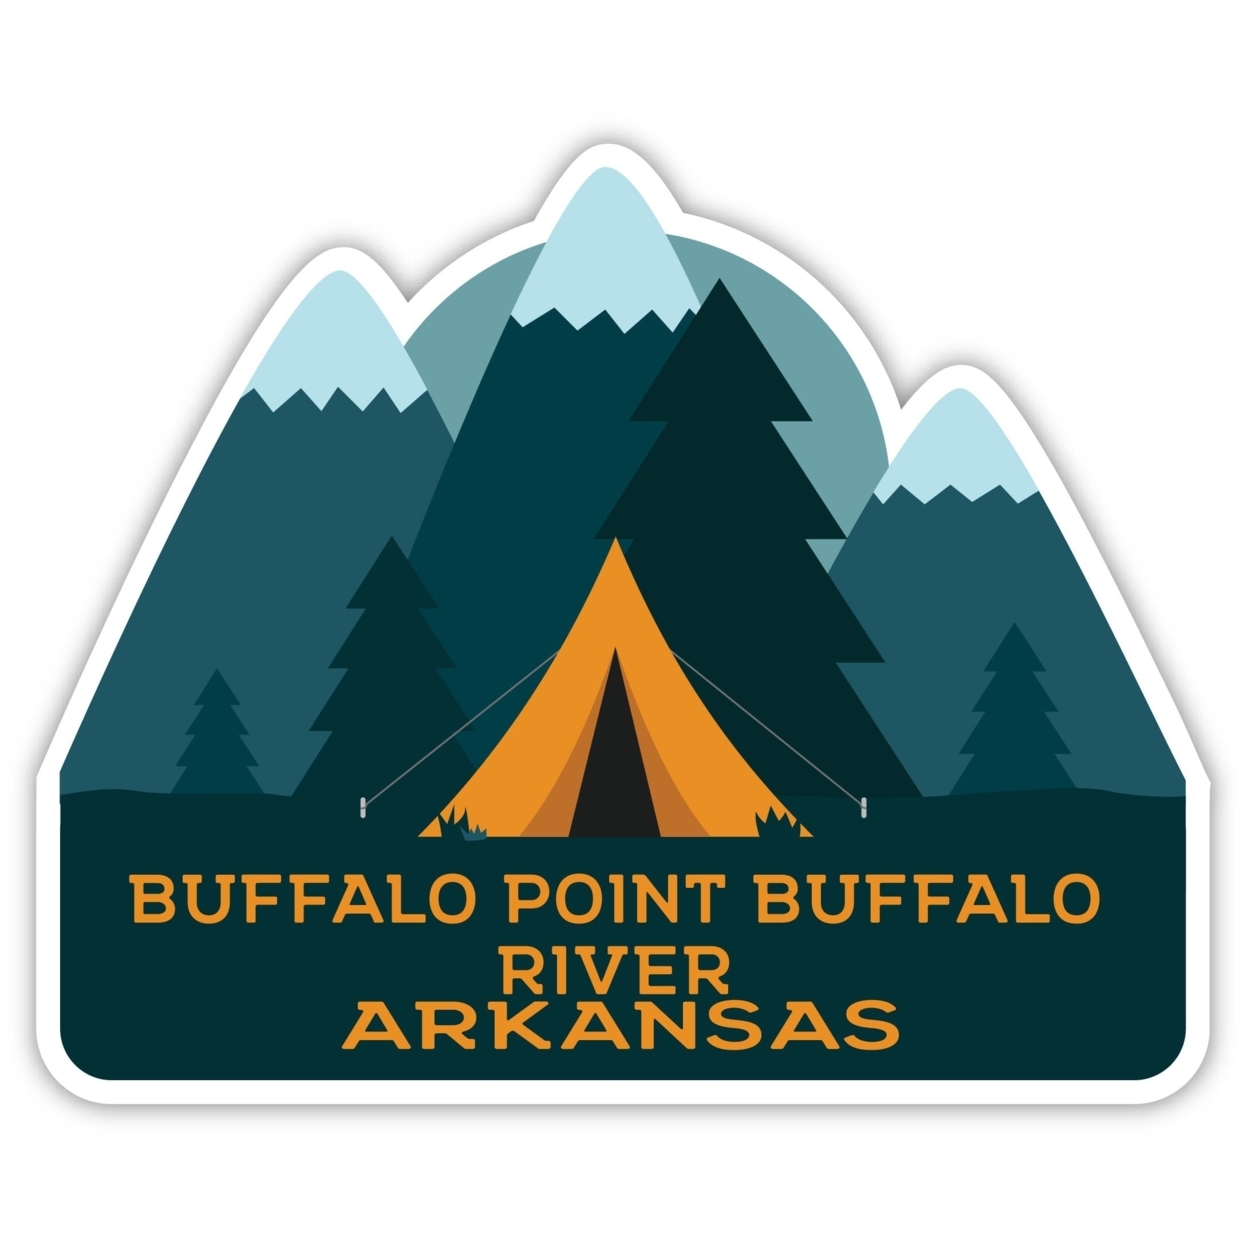 Buffalo Point Buffalo River Arkansas Souvenir Decorative Stickers (Choose Theme And Size) - Single Unit, 6-Inch, Camp Life